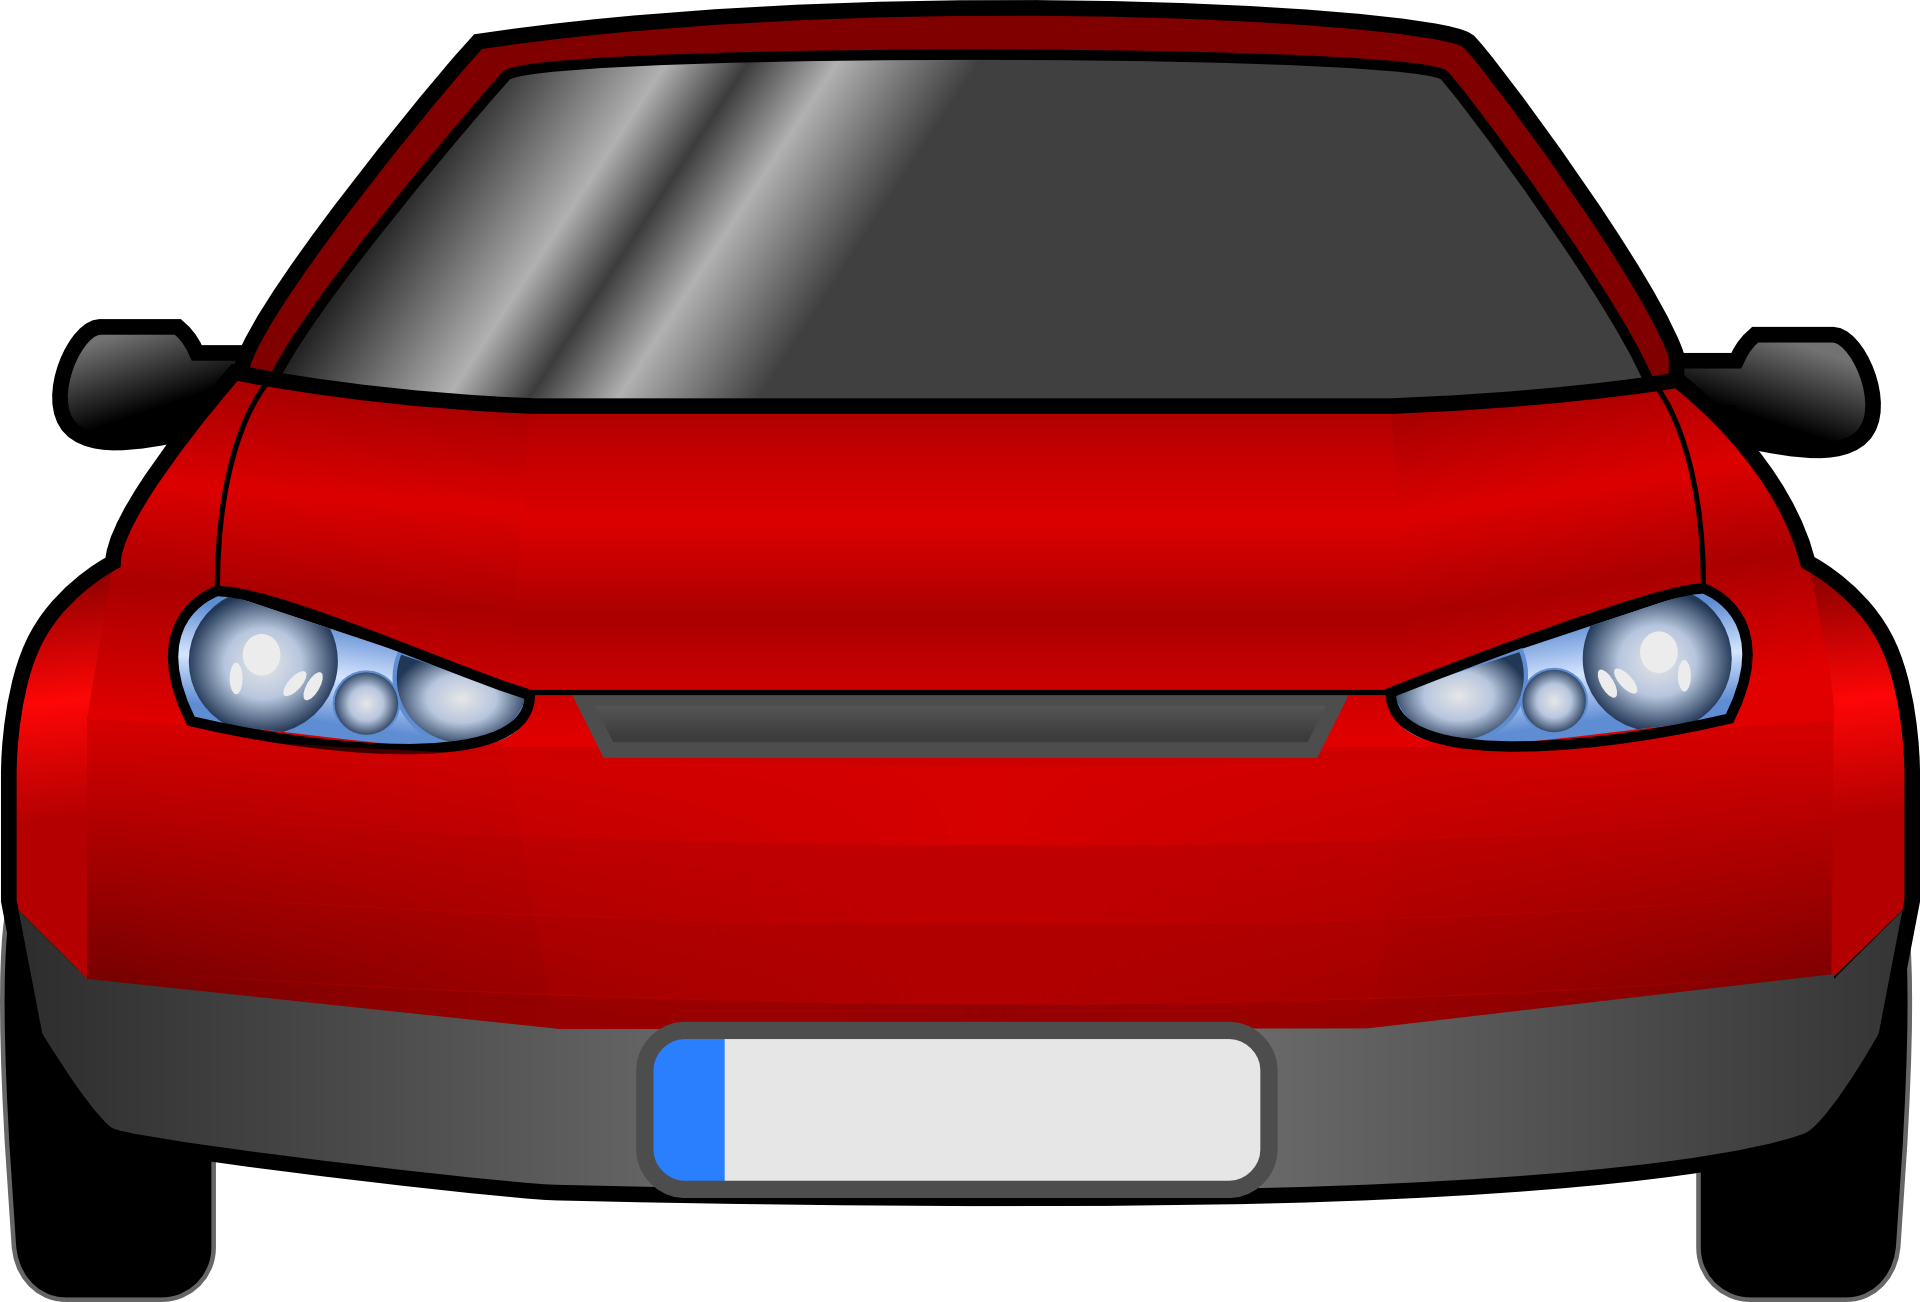 Drawing red car free image download